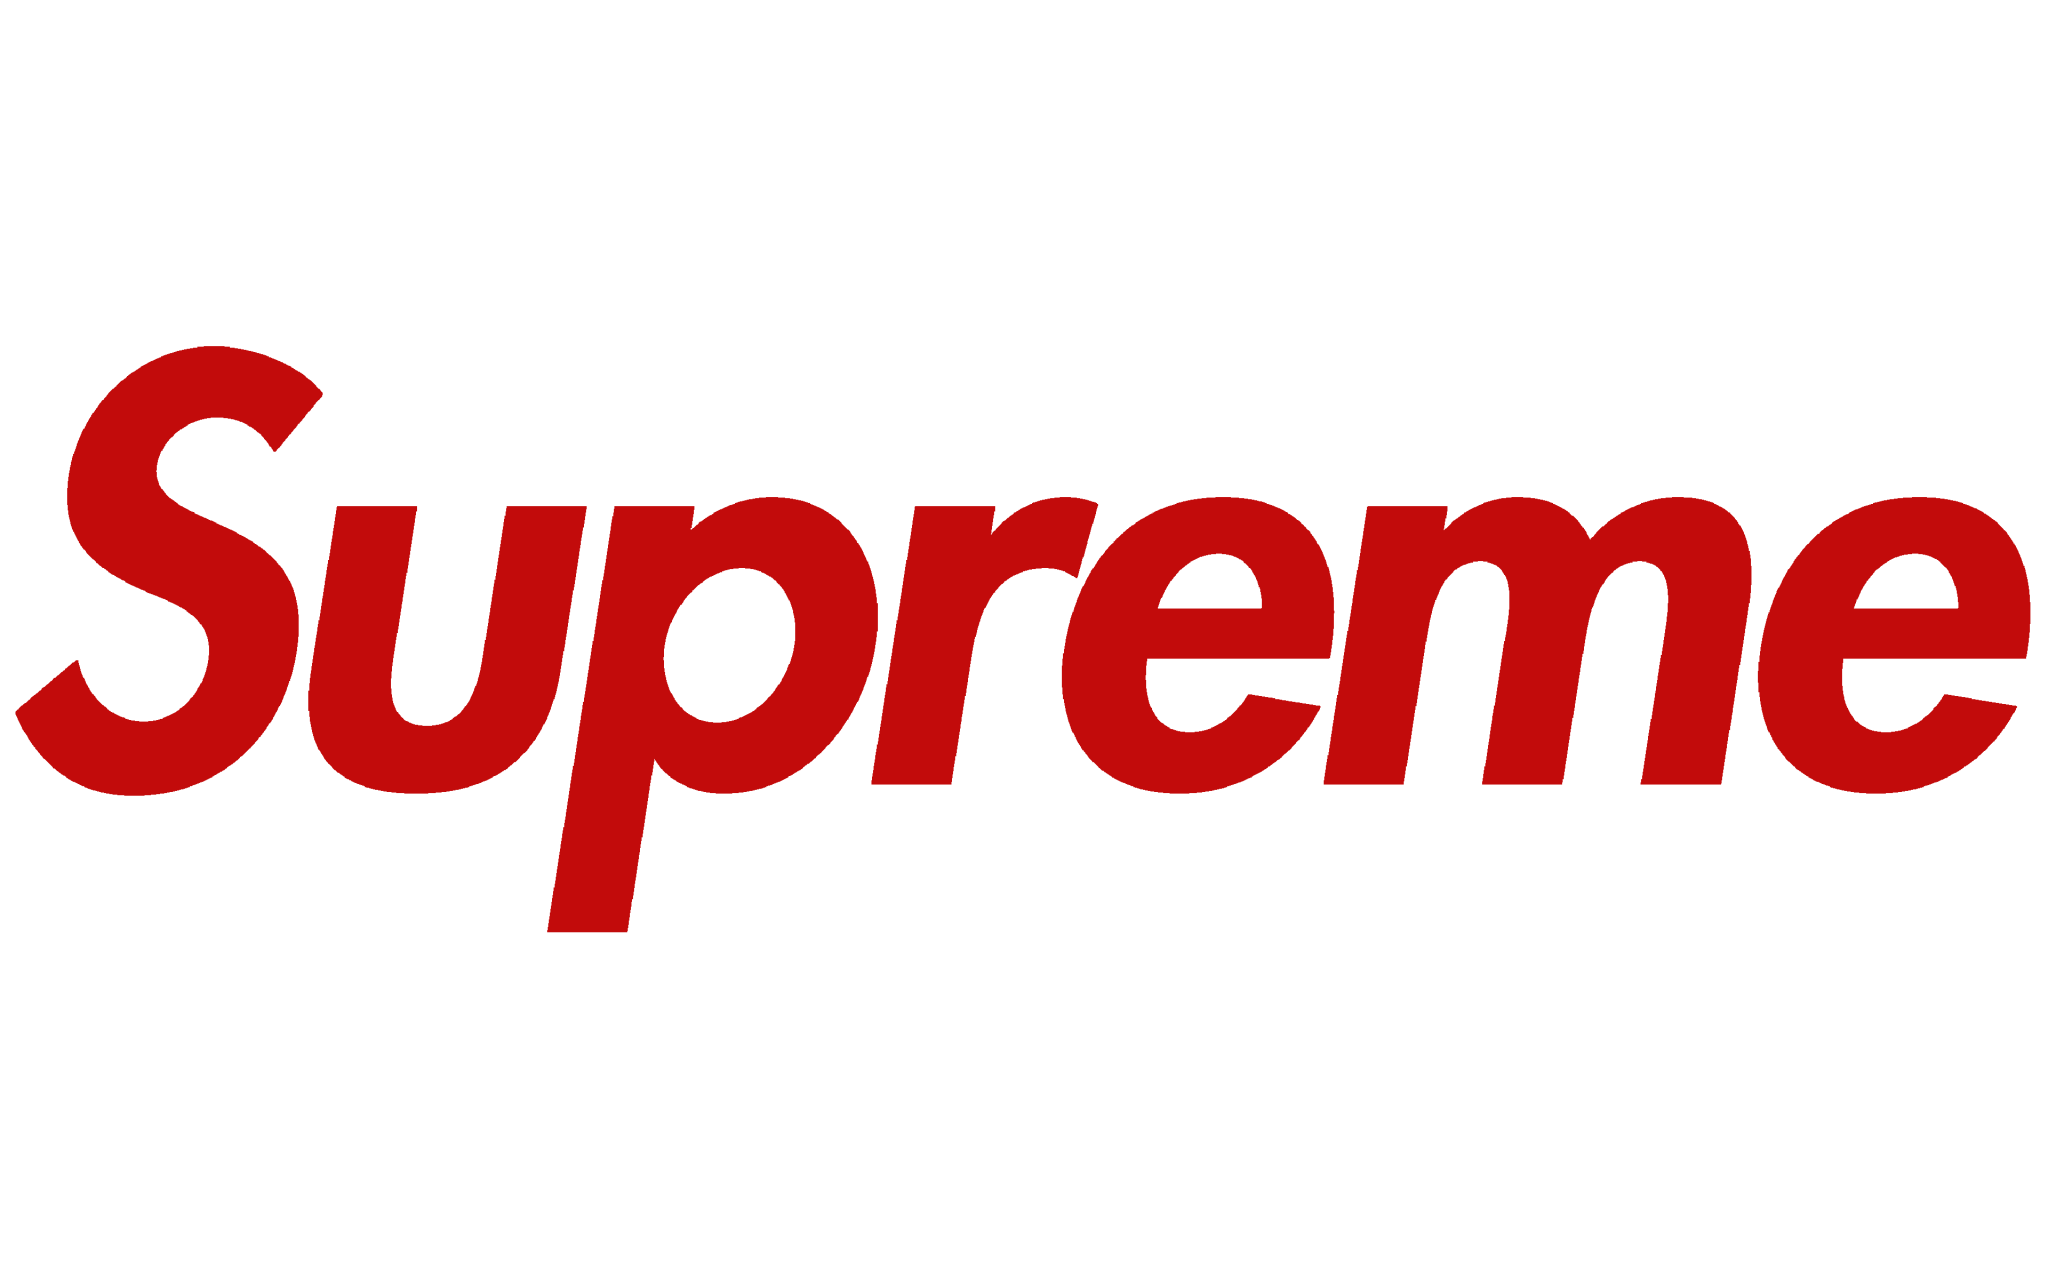 Supreme logos png - Download Free Png Images